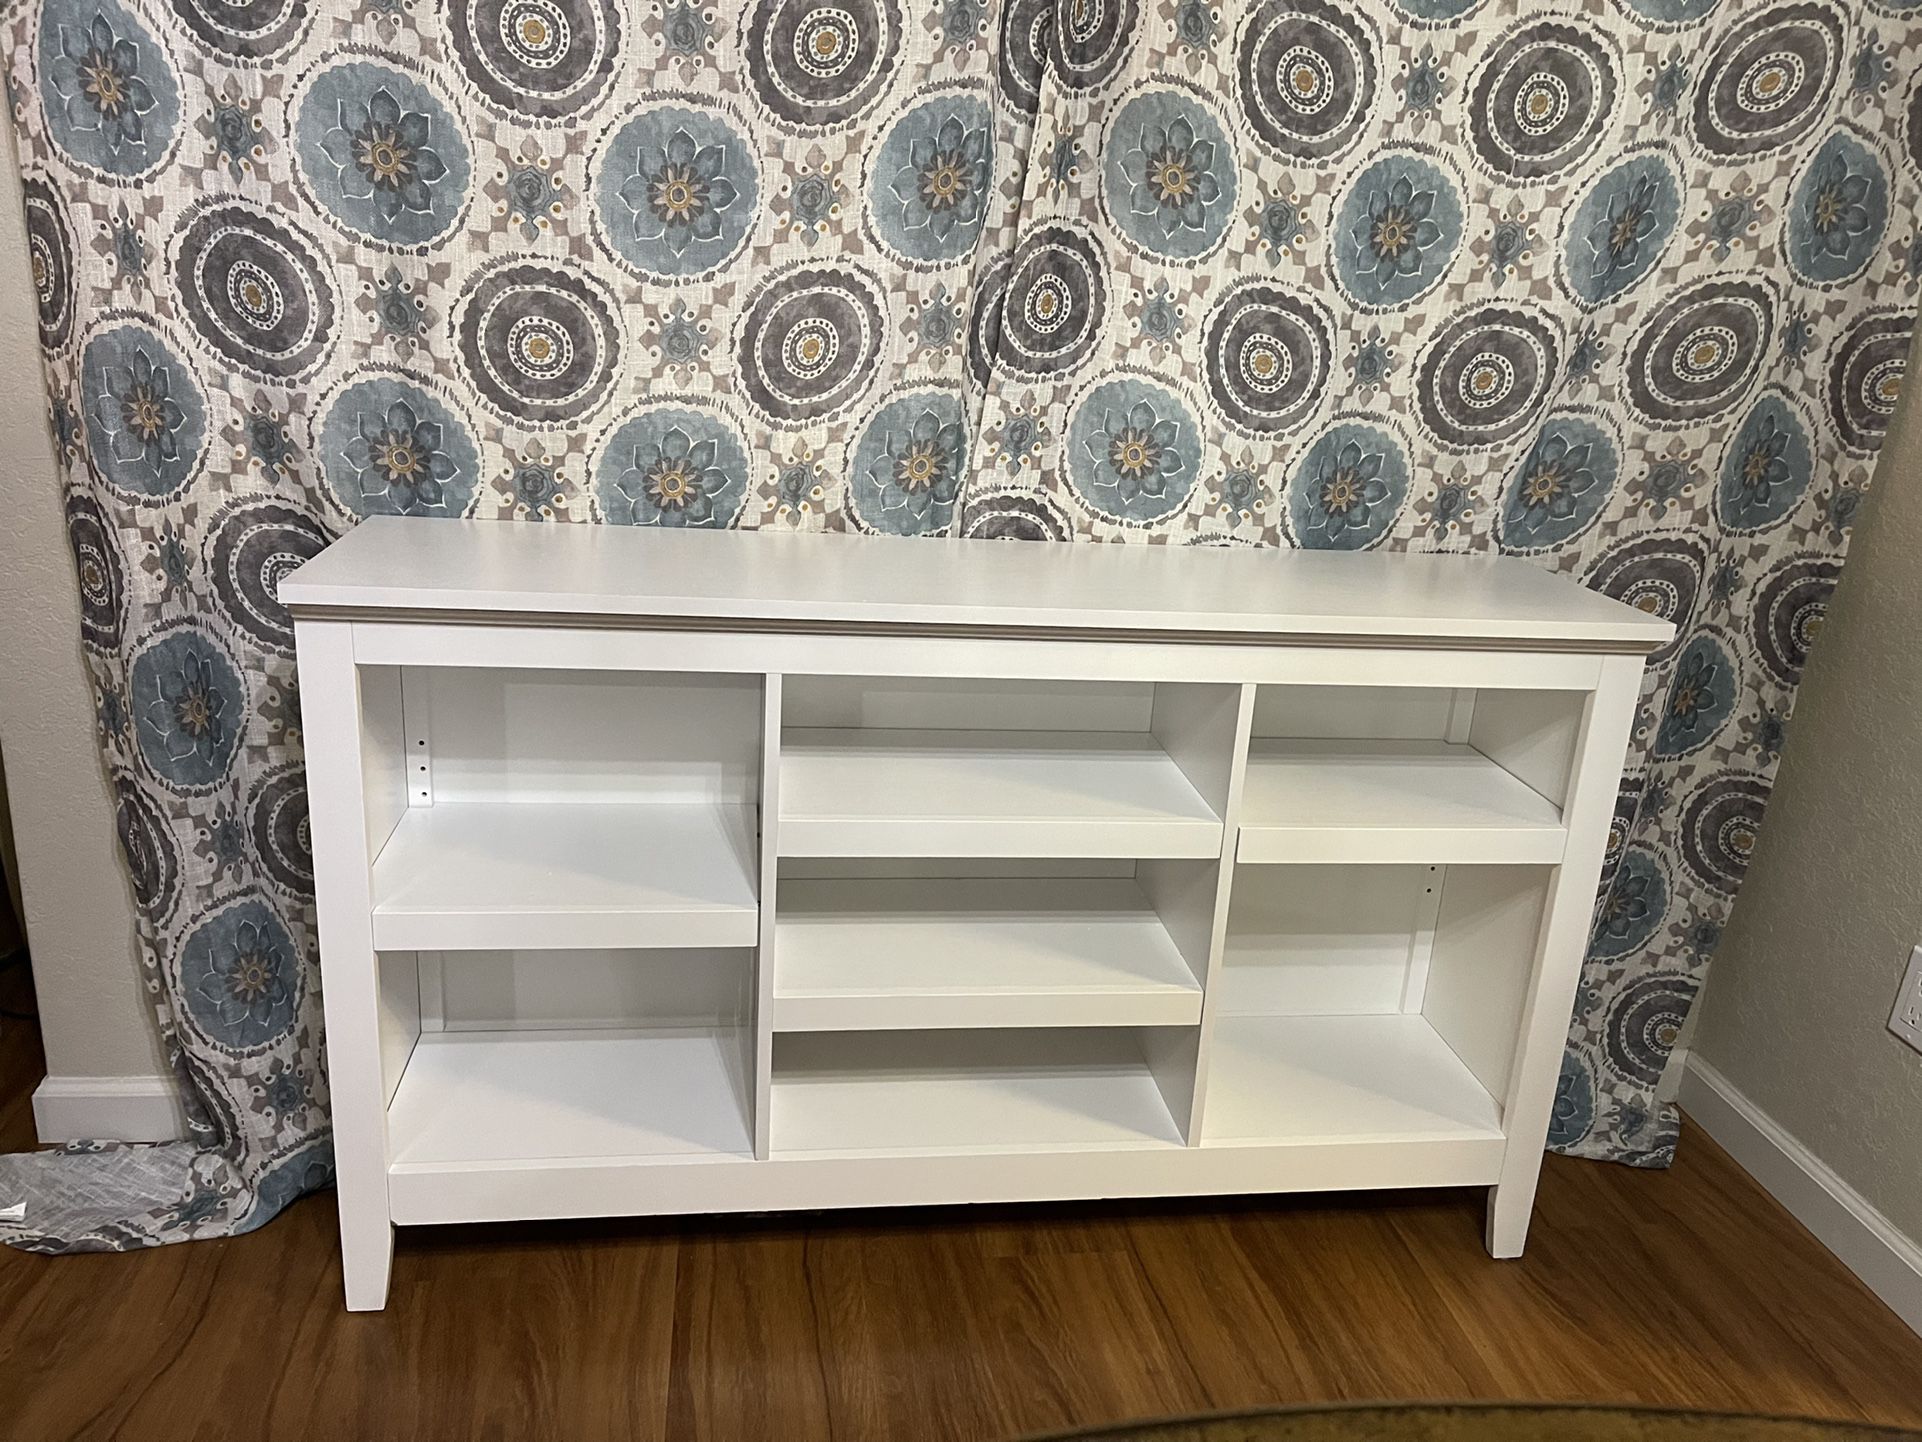 New White bookcase 